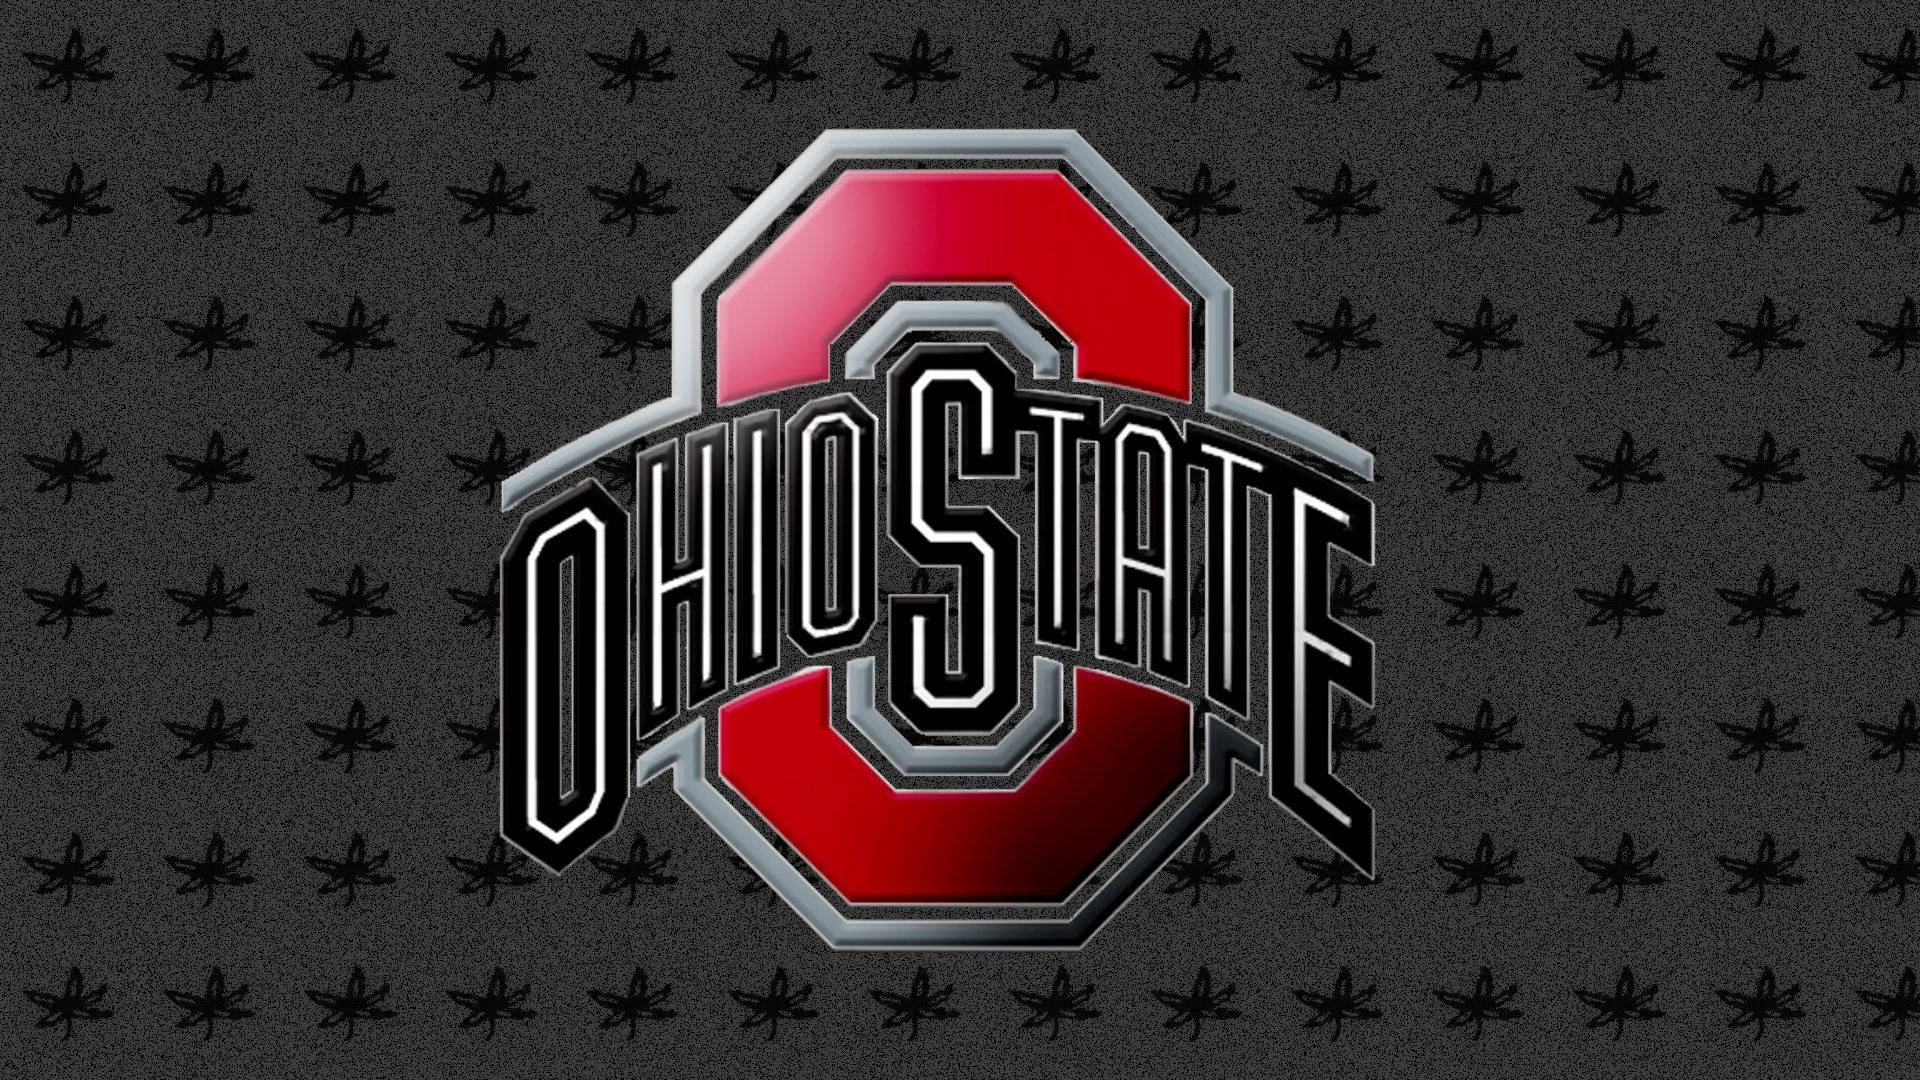 Ohio State University Background Wallpaper